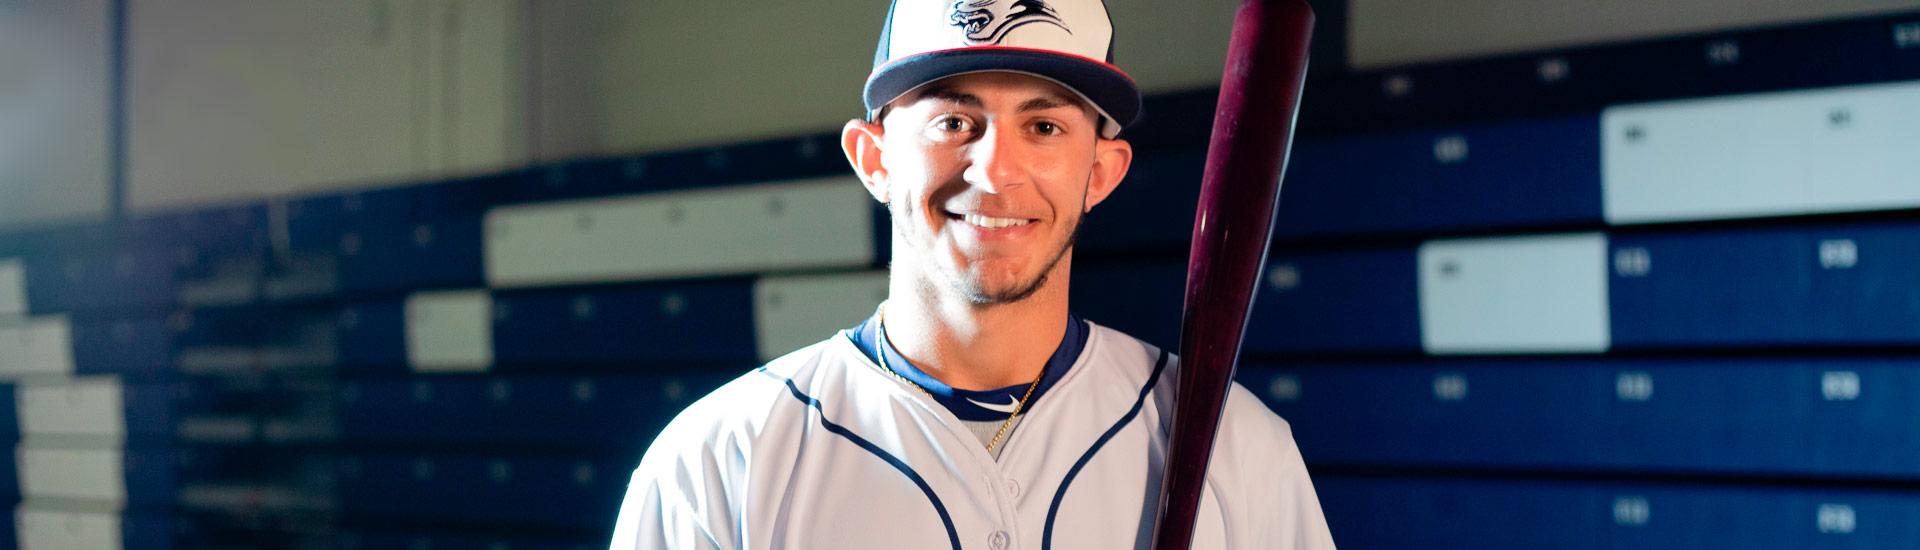 cougar's baseball player smiling with bat